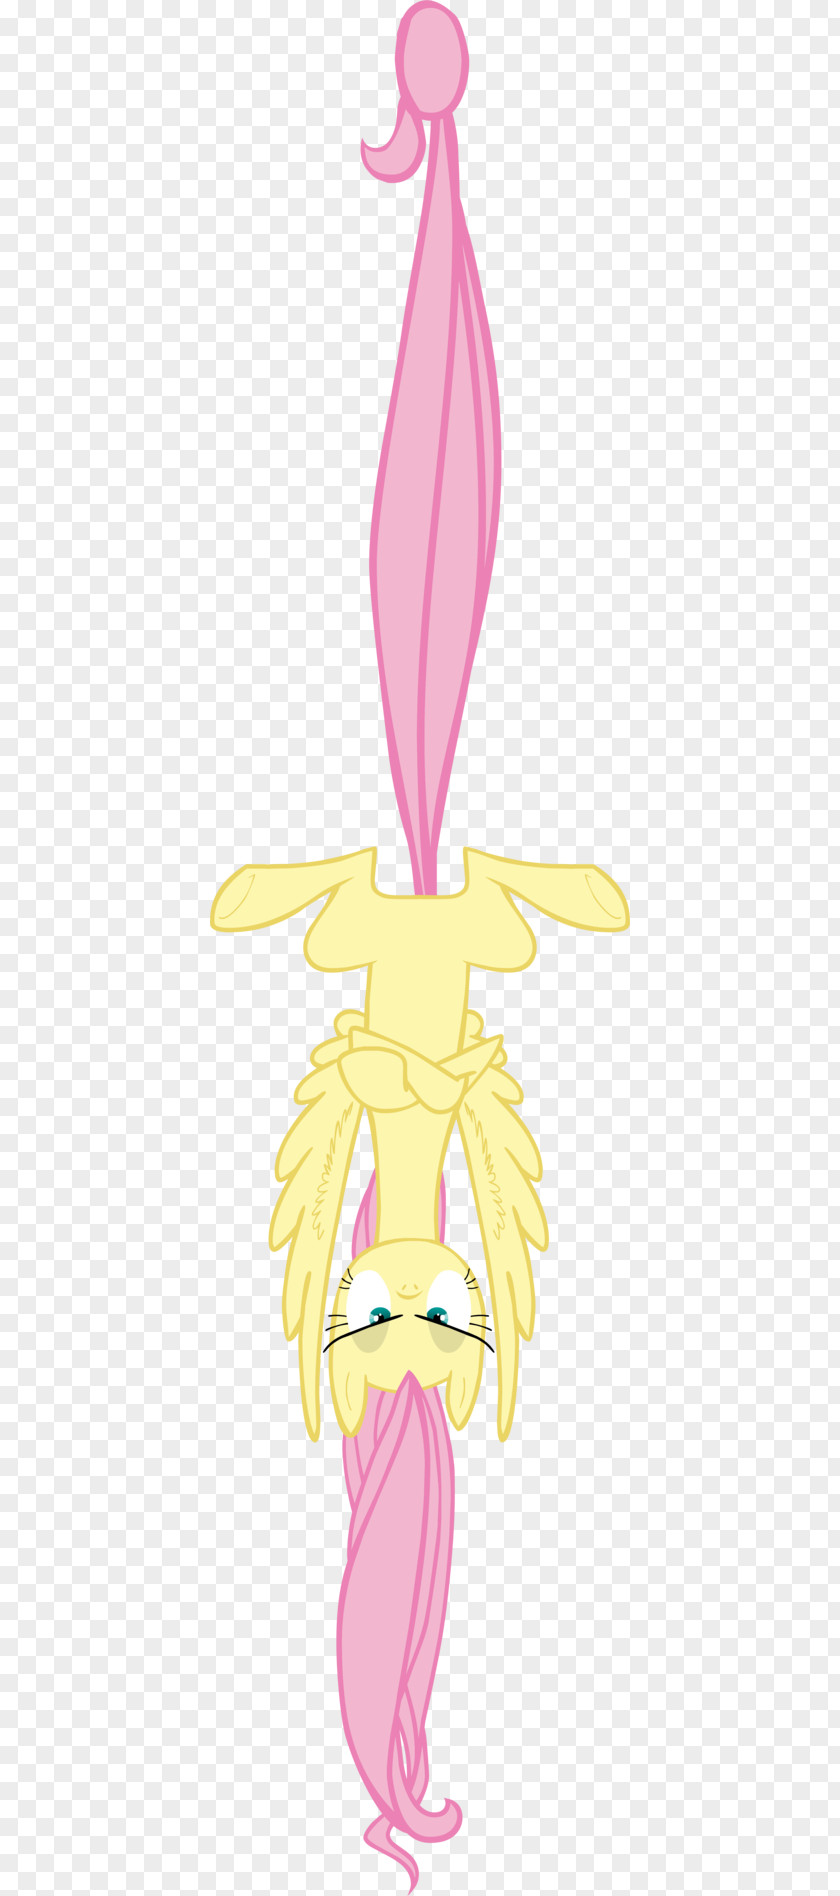 Tie Up Fluttershy Rainbow Dash Princess Luna My Little Pony PNG